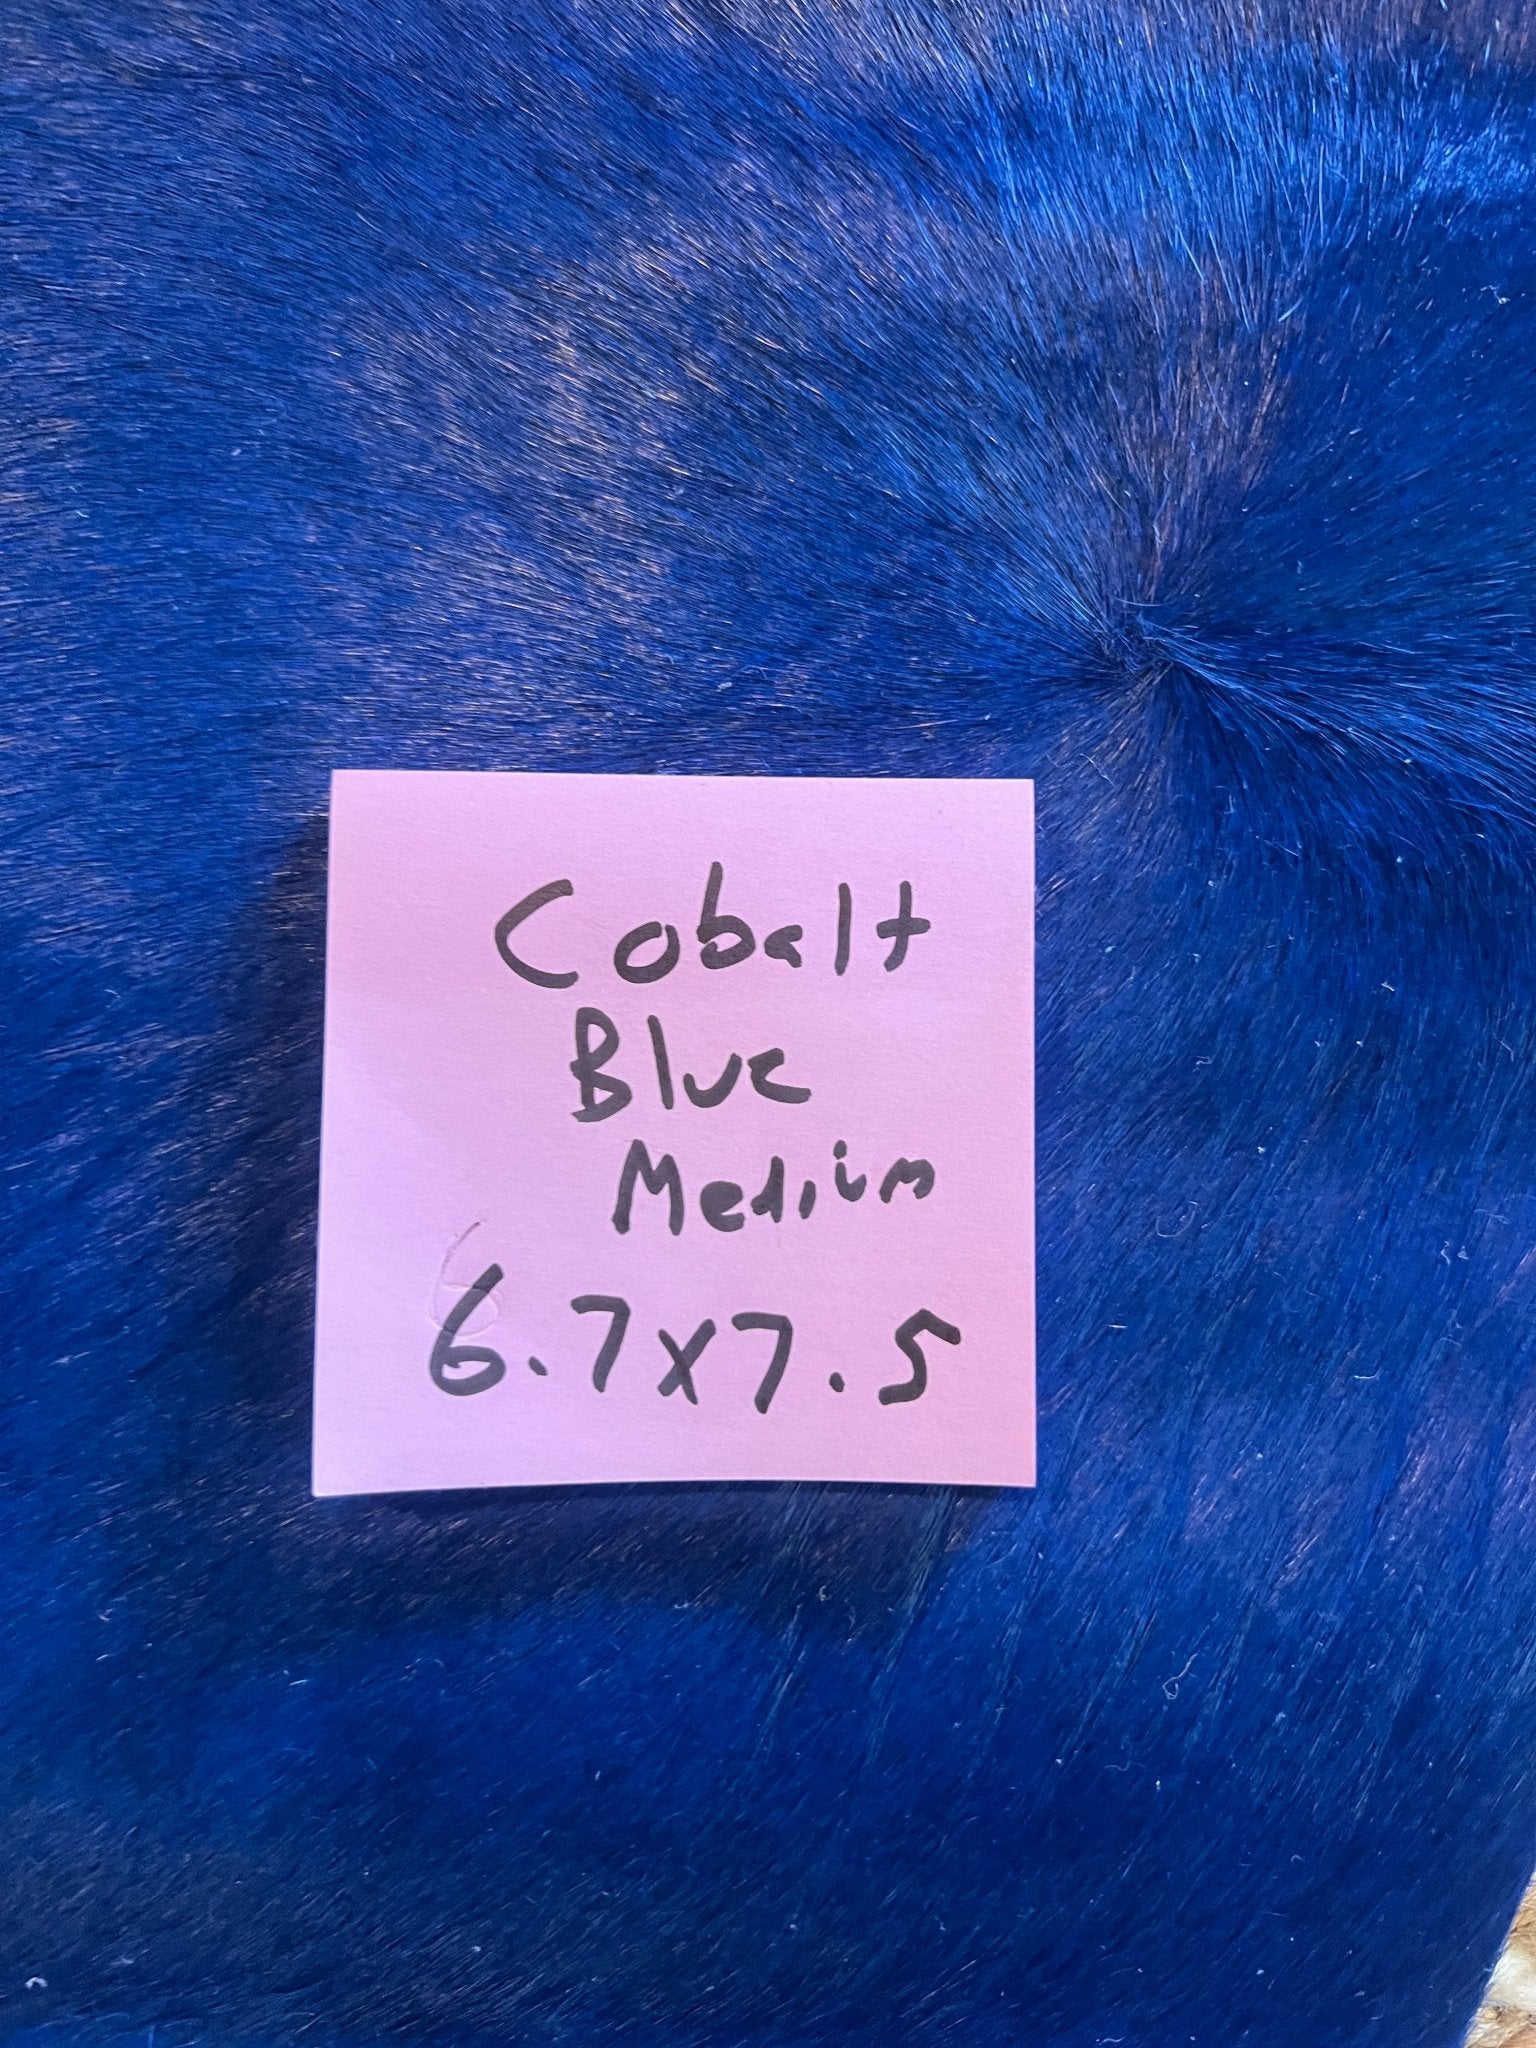 Cobalt Blue 6.7x7.5 Medium Cowhide Rug | Banana Manor Rug Factory Outlet